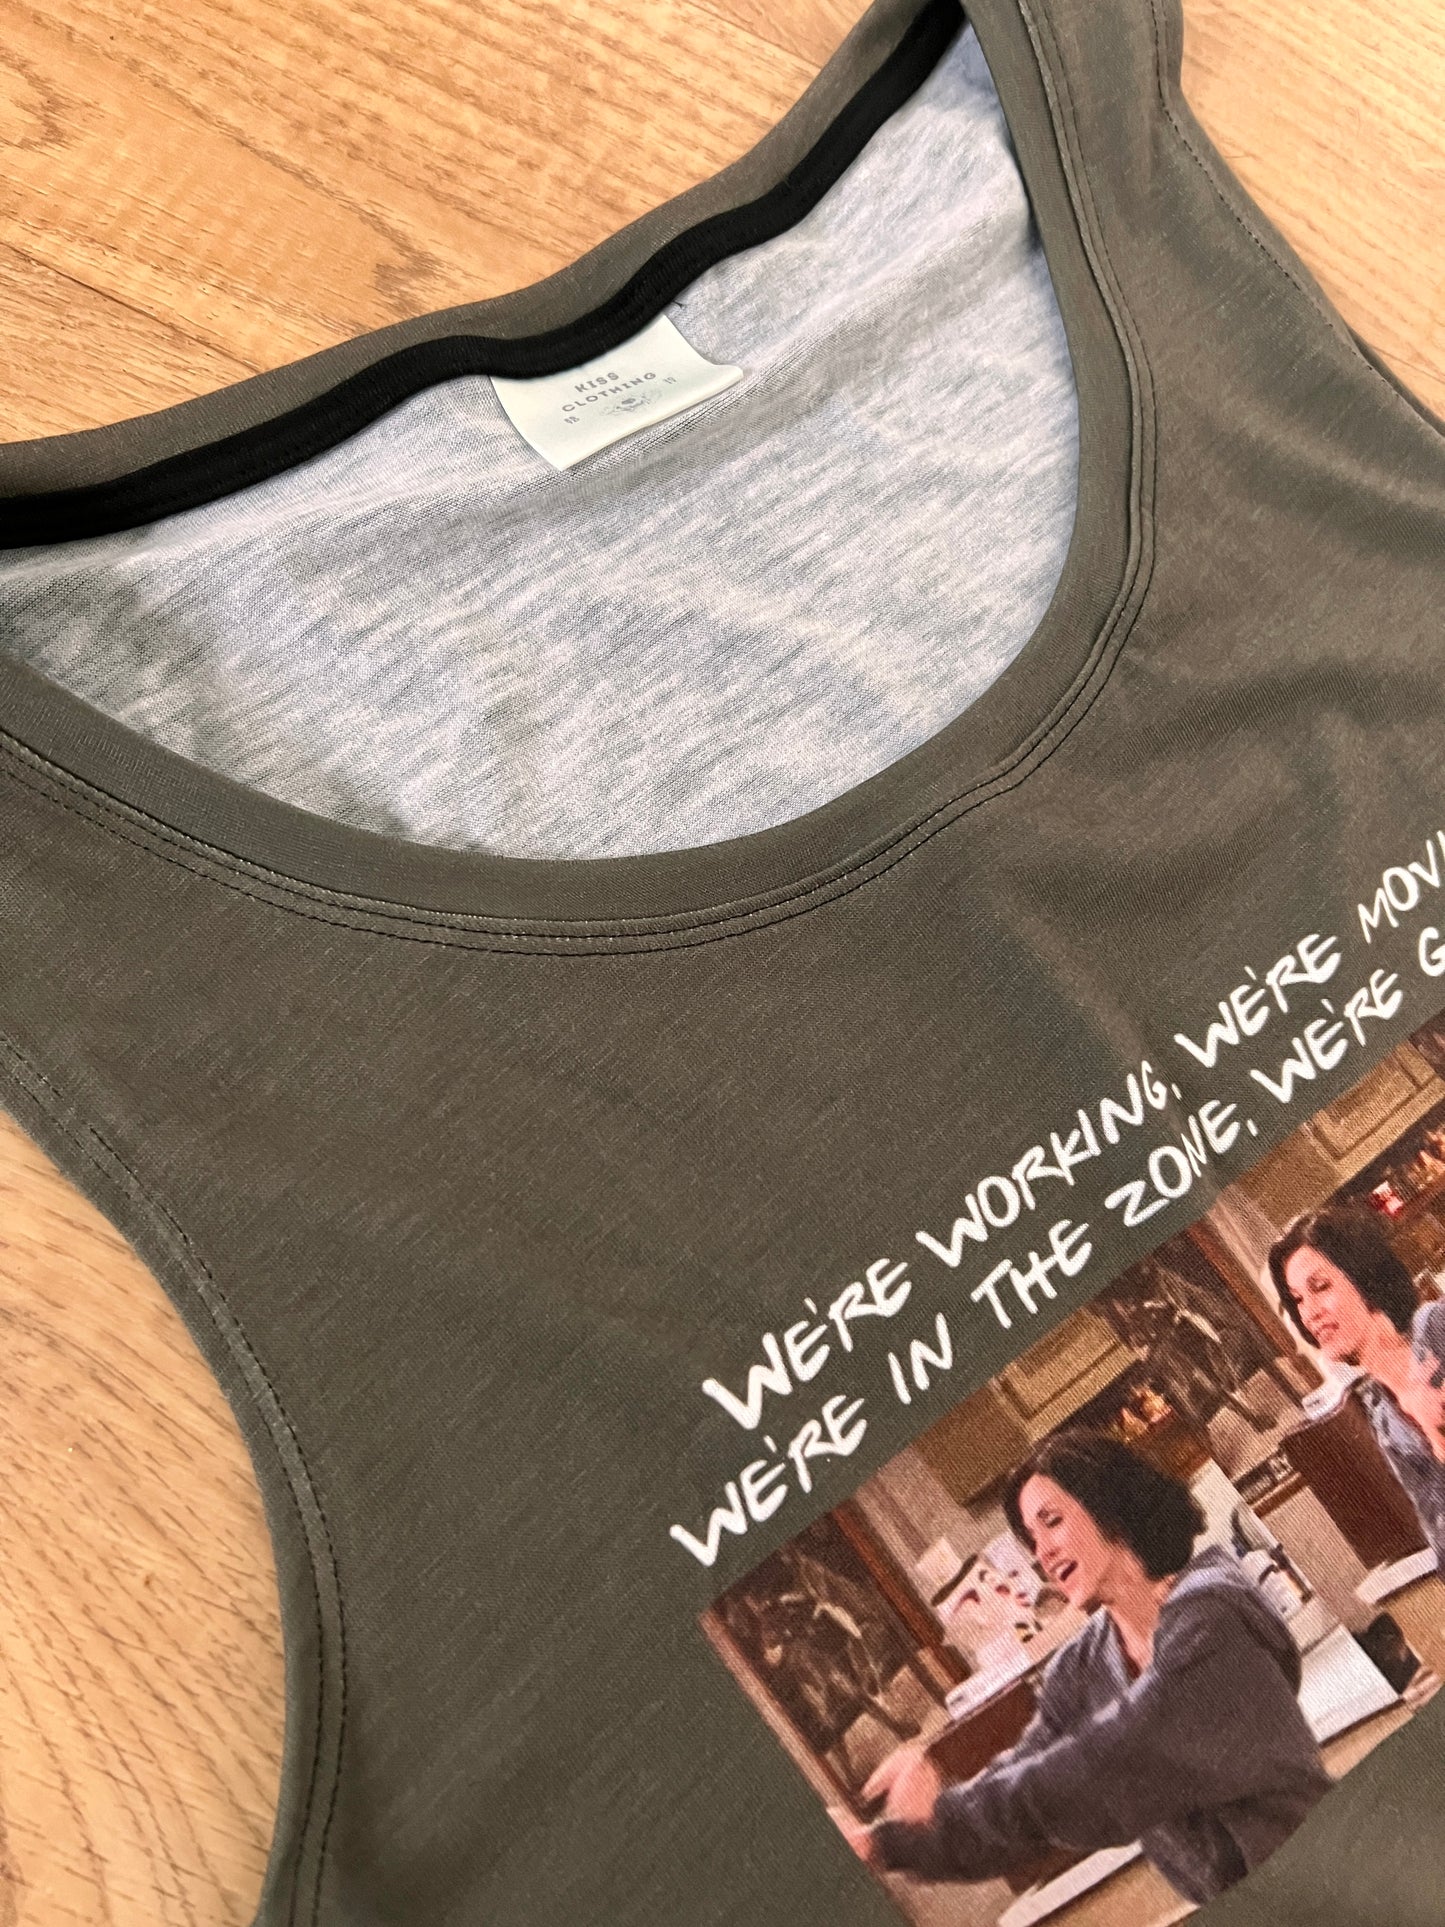 Monica Geller Workout KiSS Vest - Season 2 quote Friends - gym